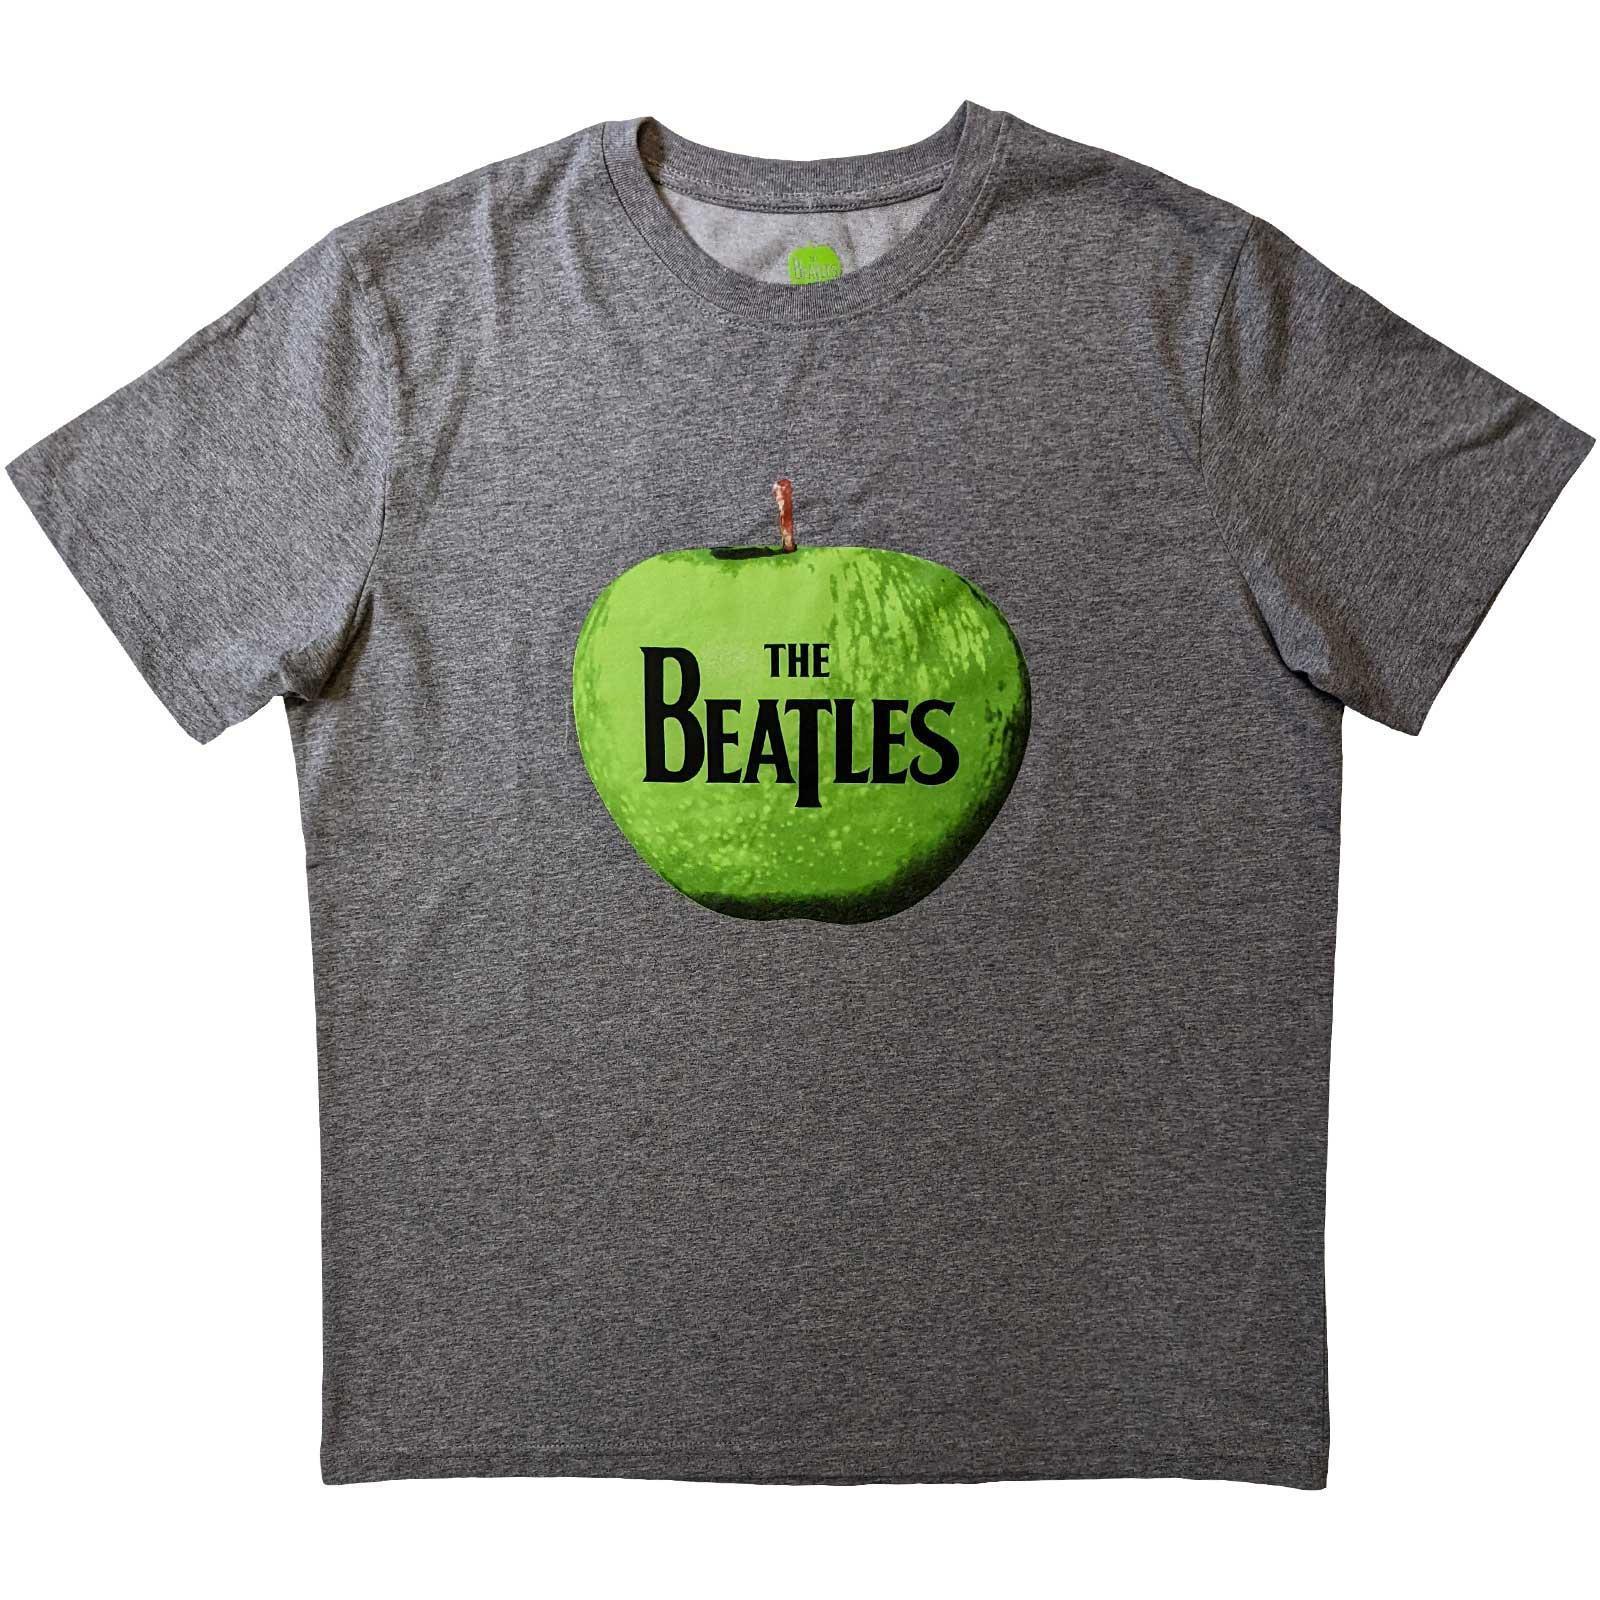 The Beatles Unisex Adult Apple Cotton T-Shirt (Grey) (S)